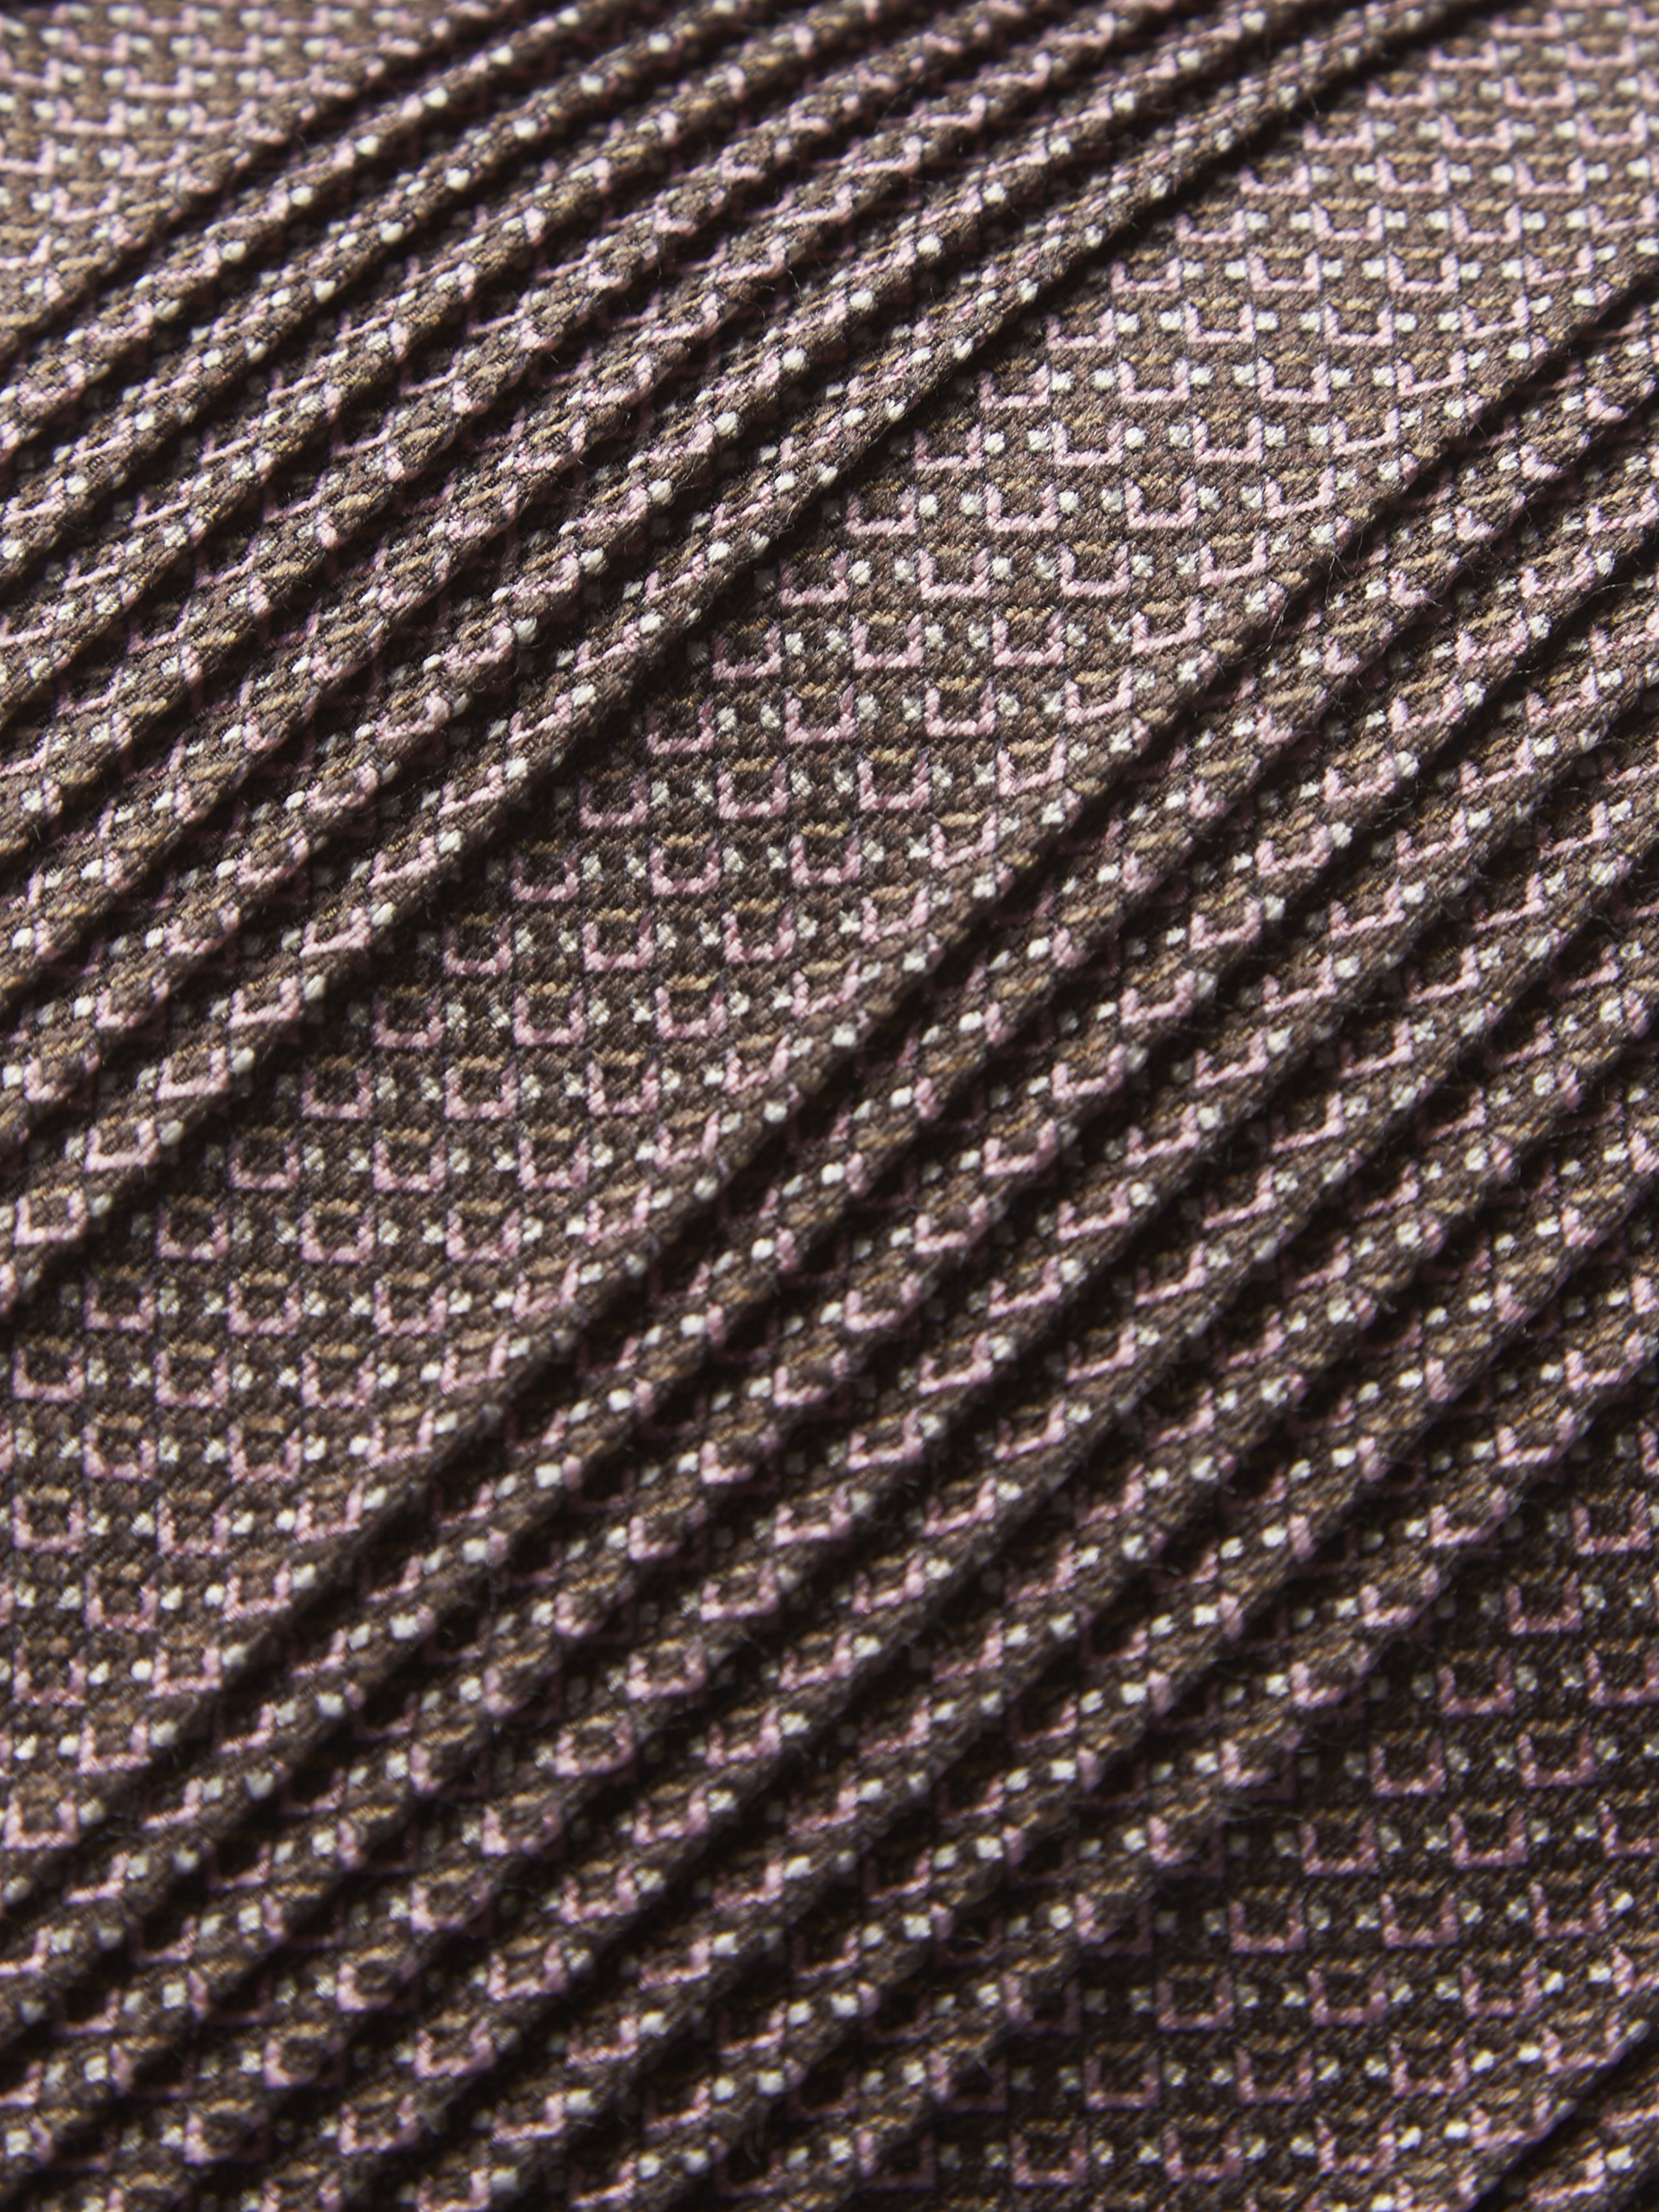 Brown and dusty rose silk plissé printed tie